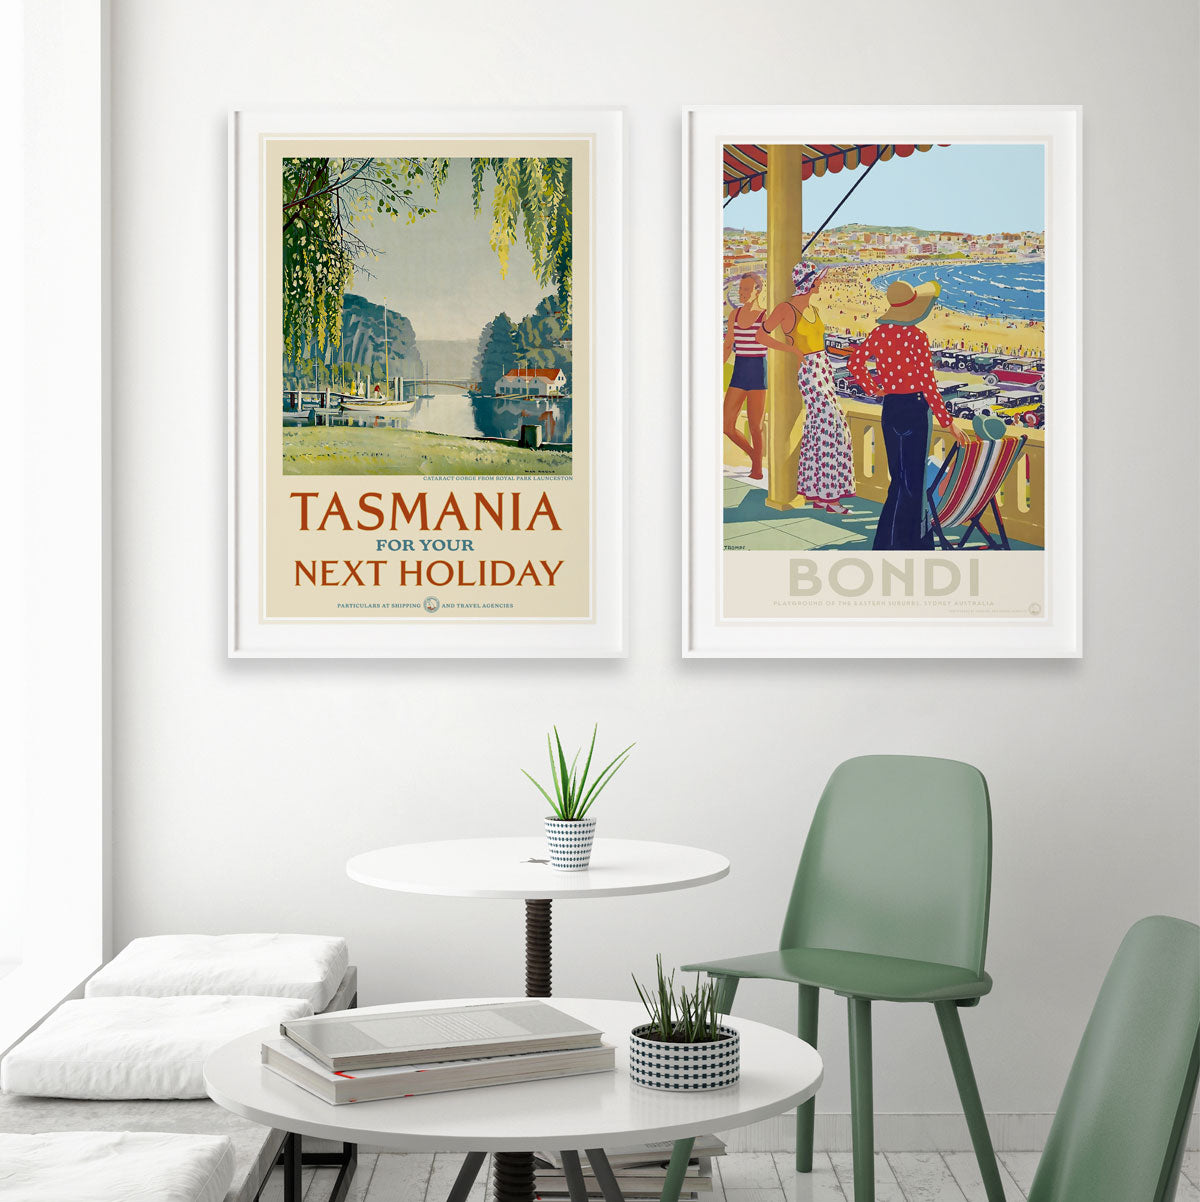 Tasmania nextholiday vintage advertising poster print from Places We Luv